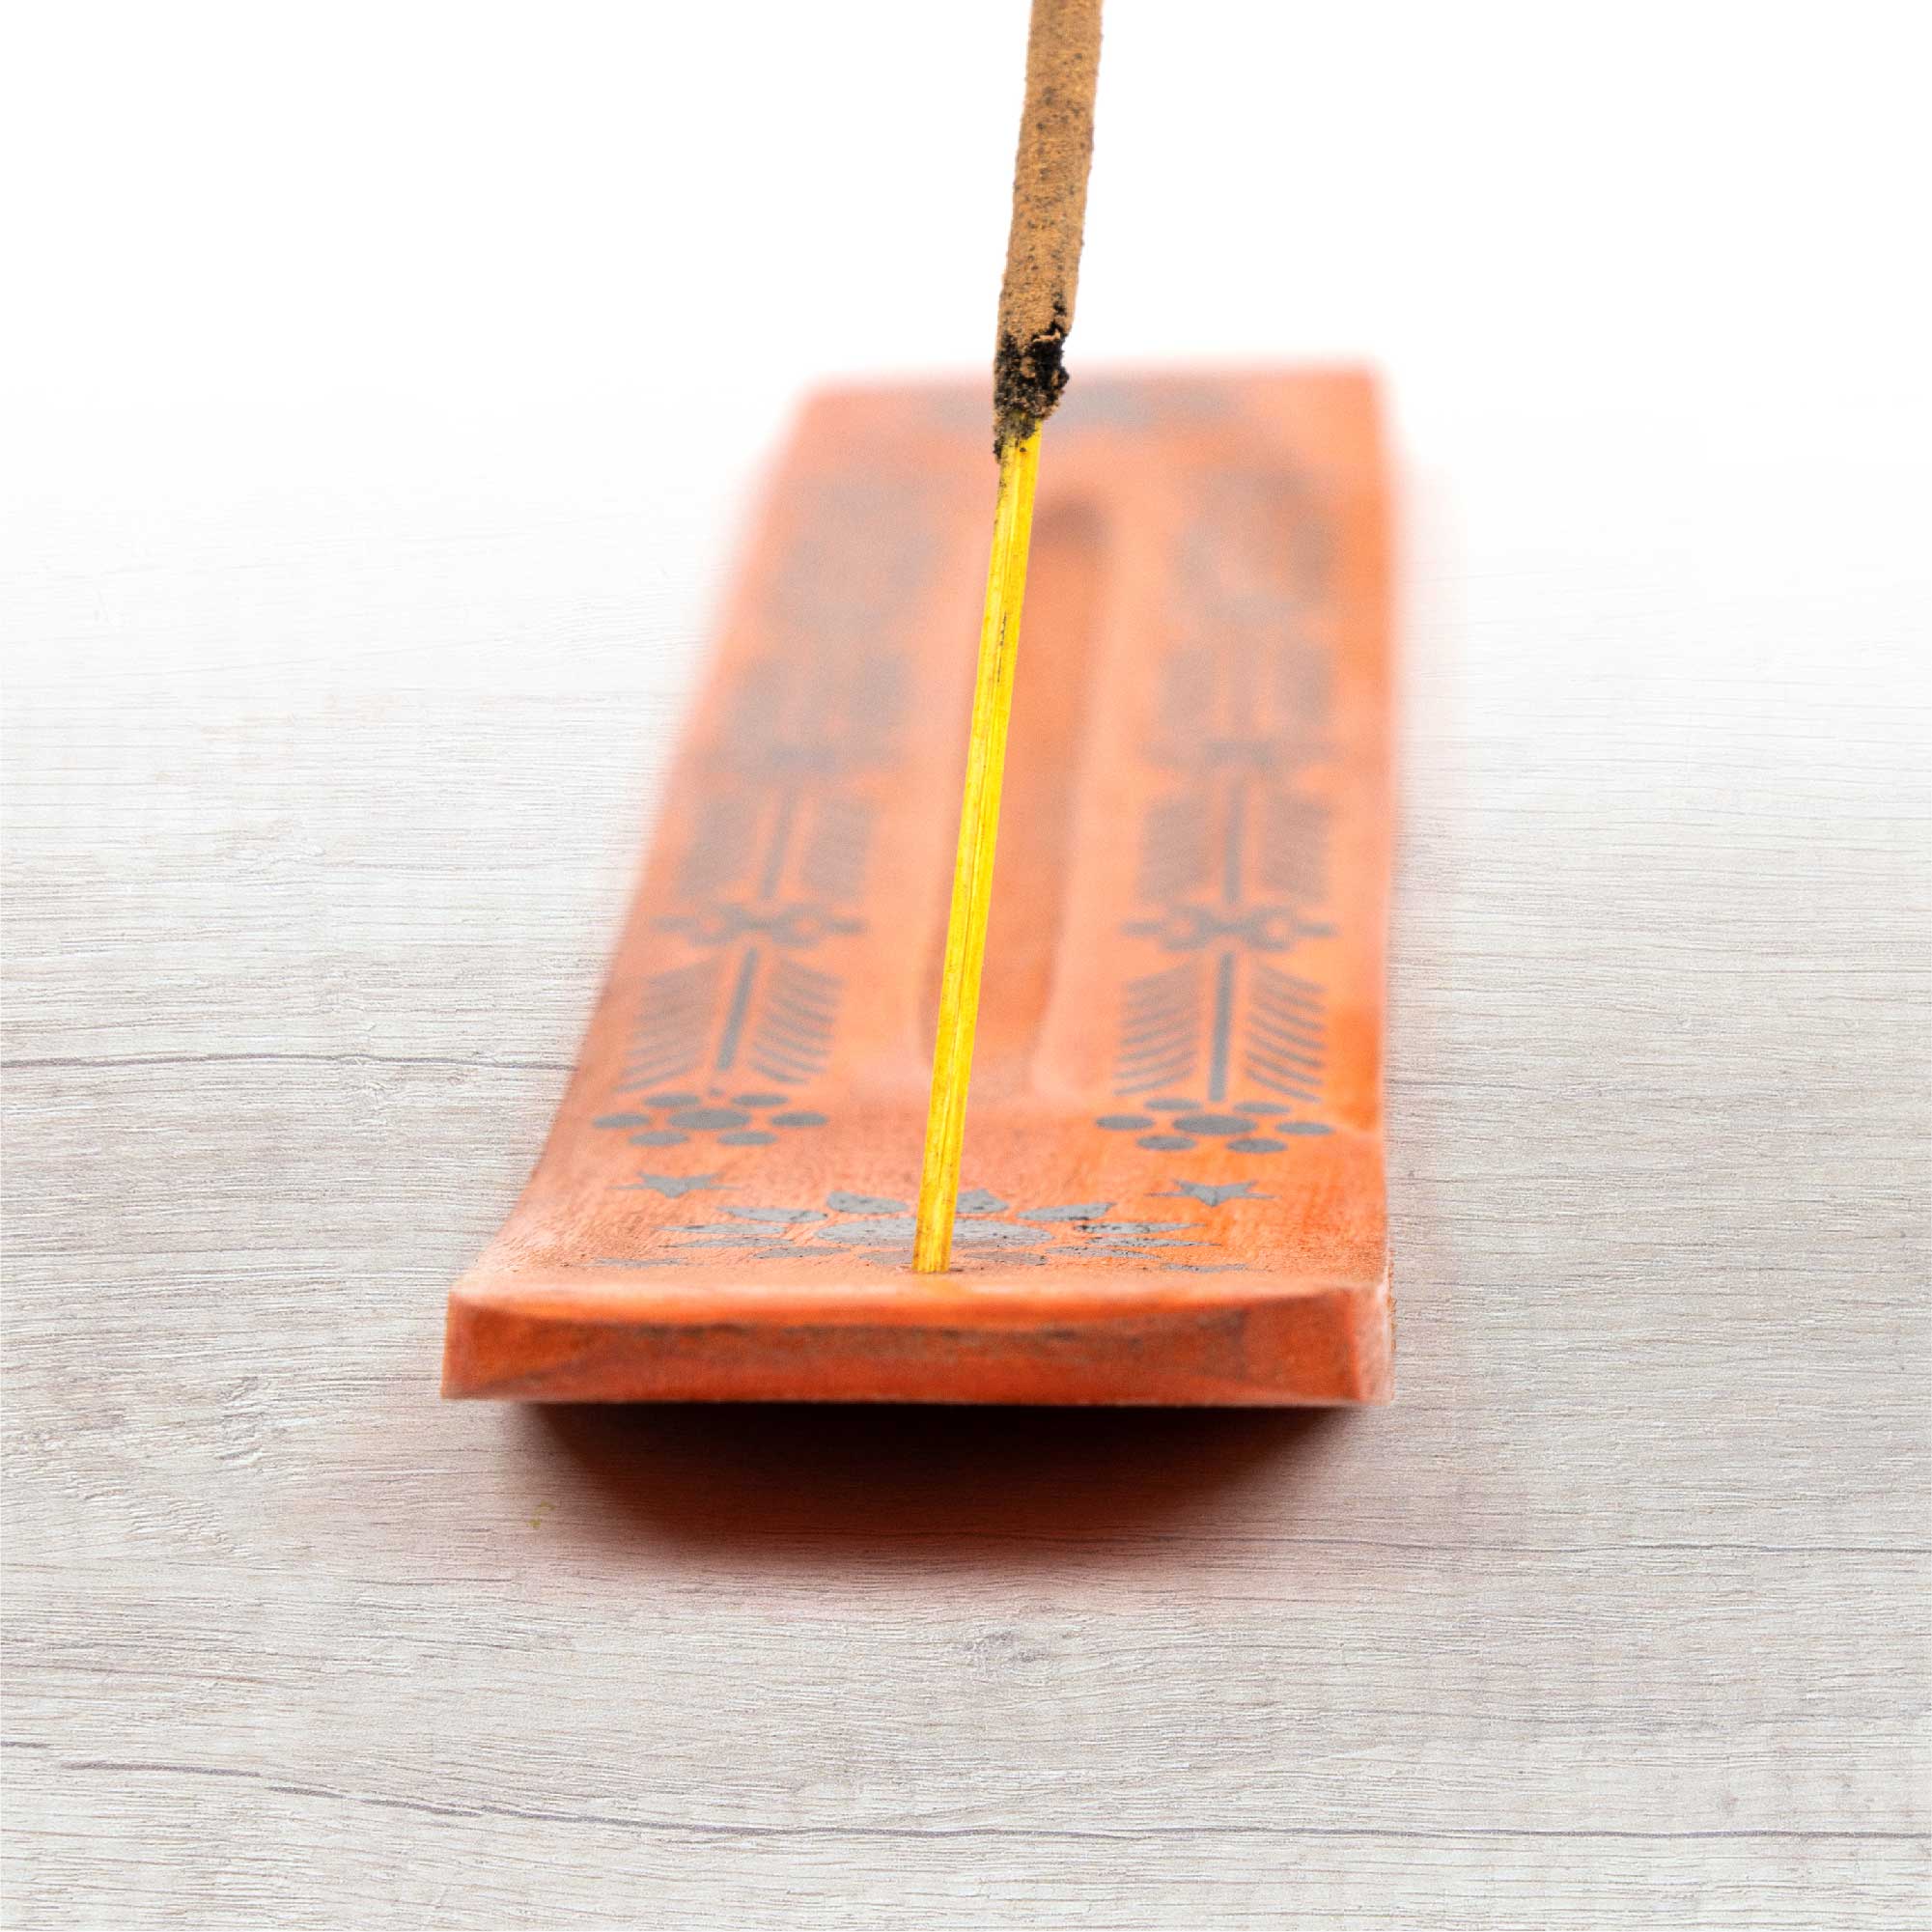 Incense Holder - Orange Sun